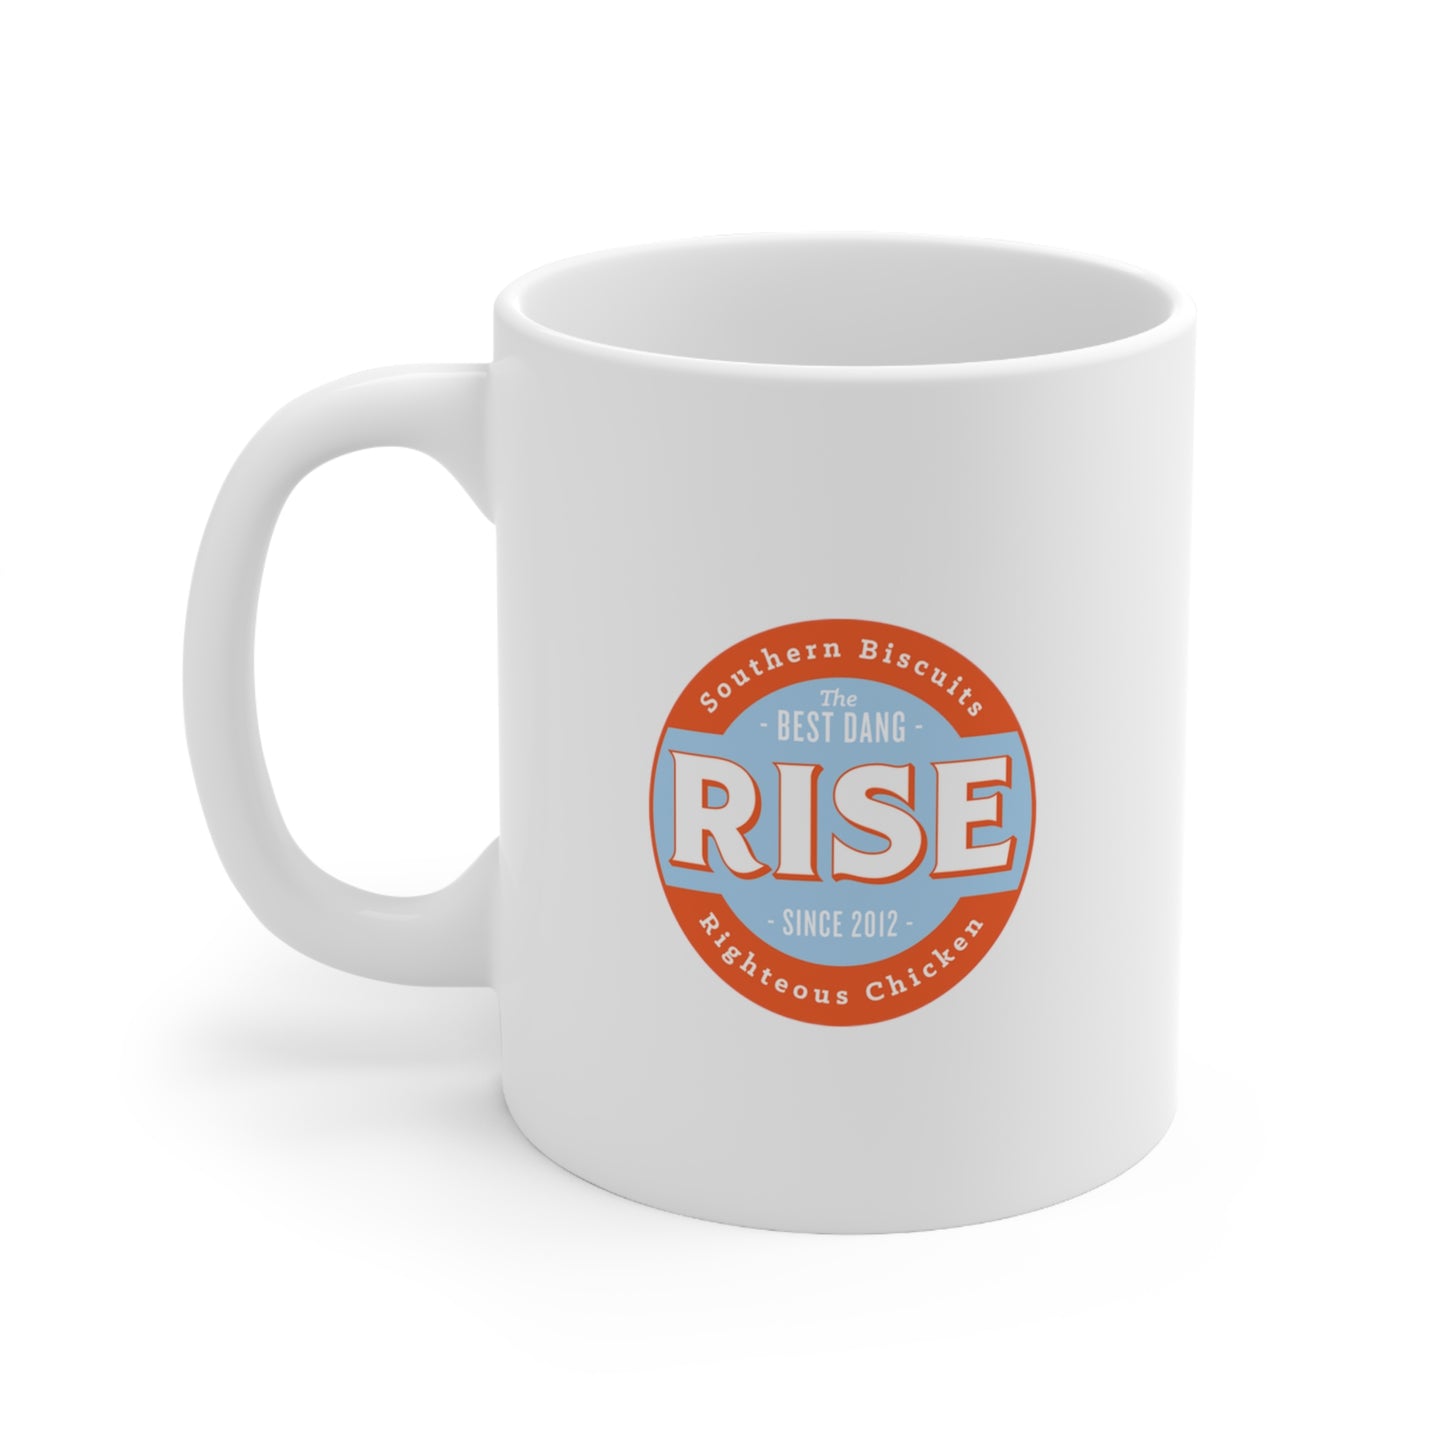 Righteous Chicken Biscuit - Rise Ceramic Mug 11oz